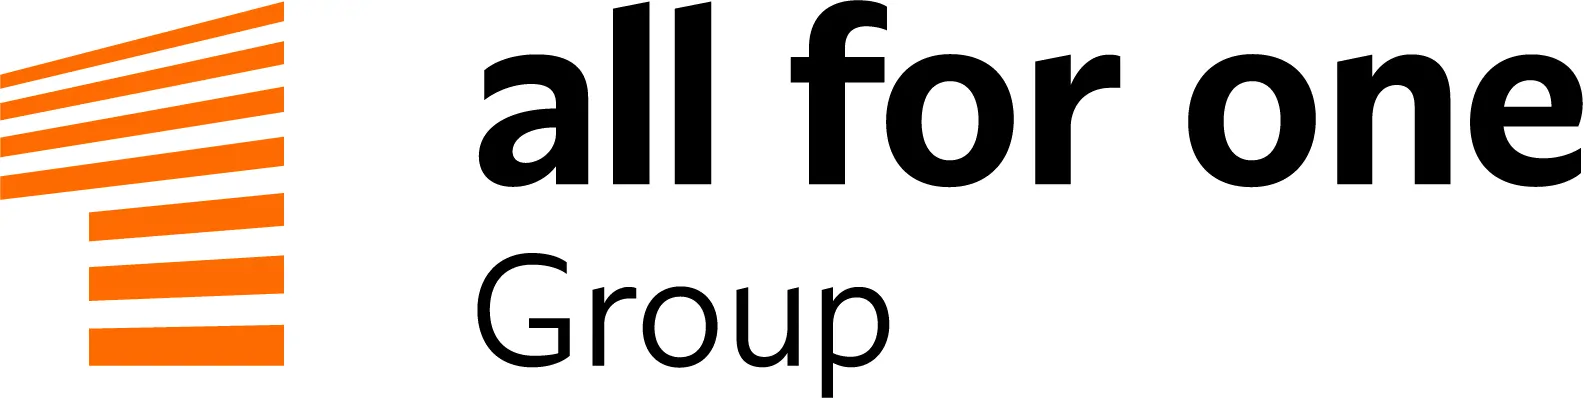 Logo all for one Group, valantic partner